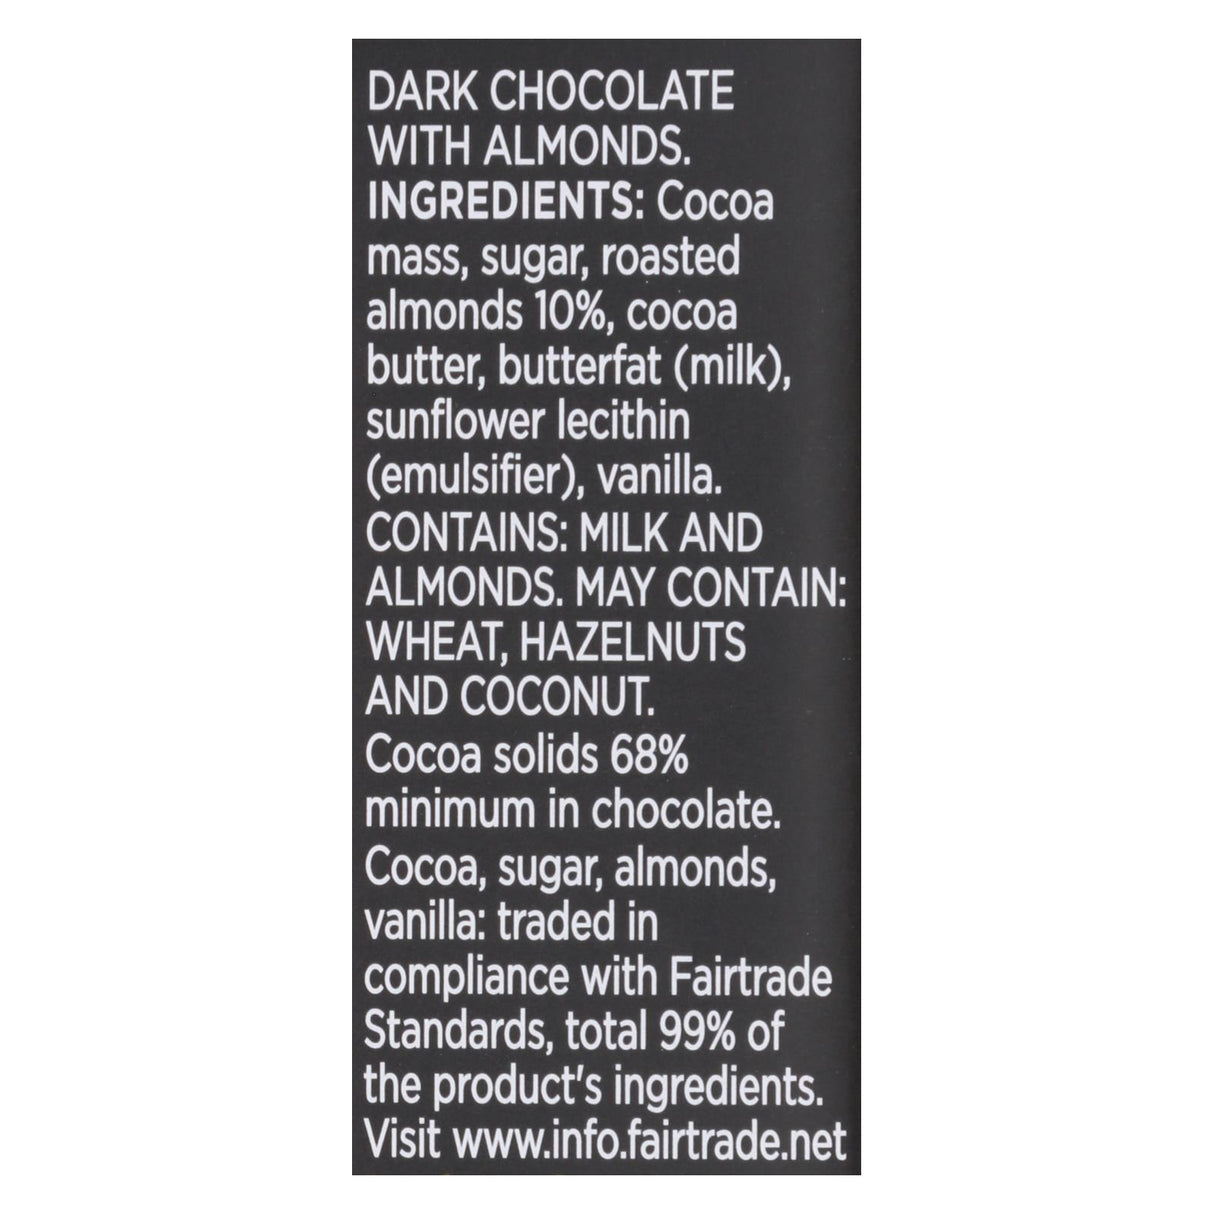 Divine Dark Chocolate Bar with Almonds (Pack of 12 - 3 Oz.) - Cozy Farm 